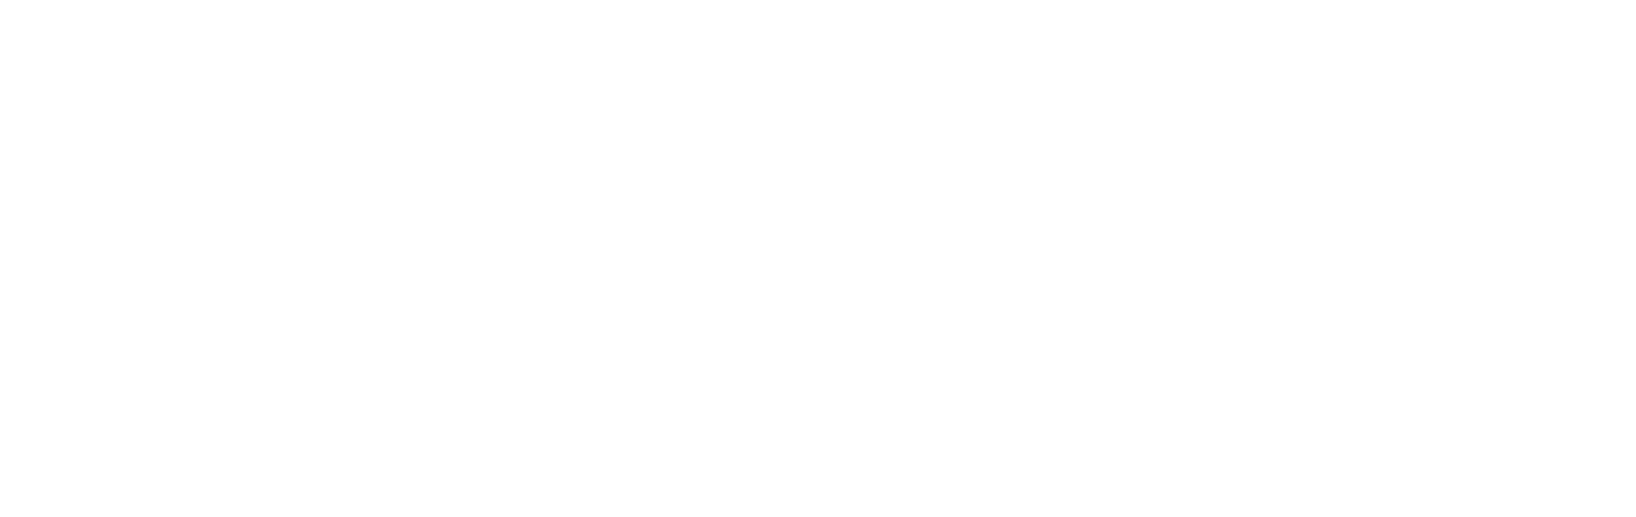 Zeta Global Logo groß für dunkle Hintergründe (transparentes PNG)